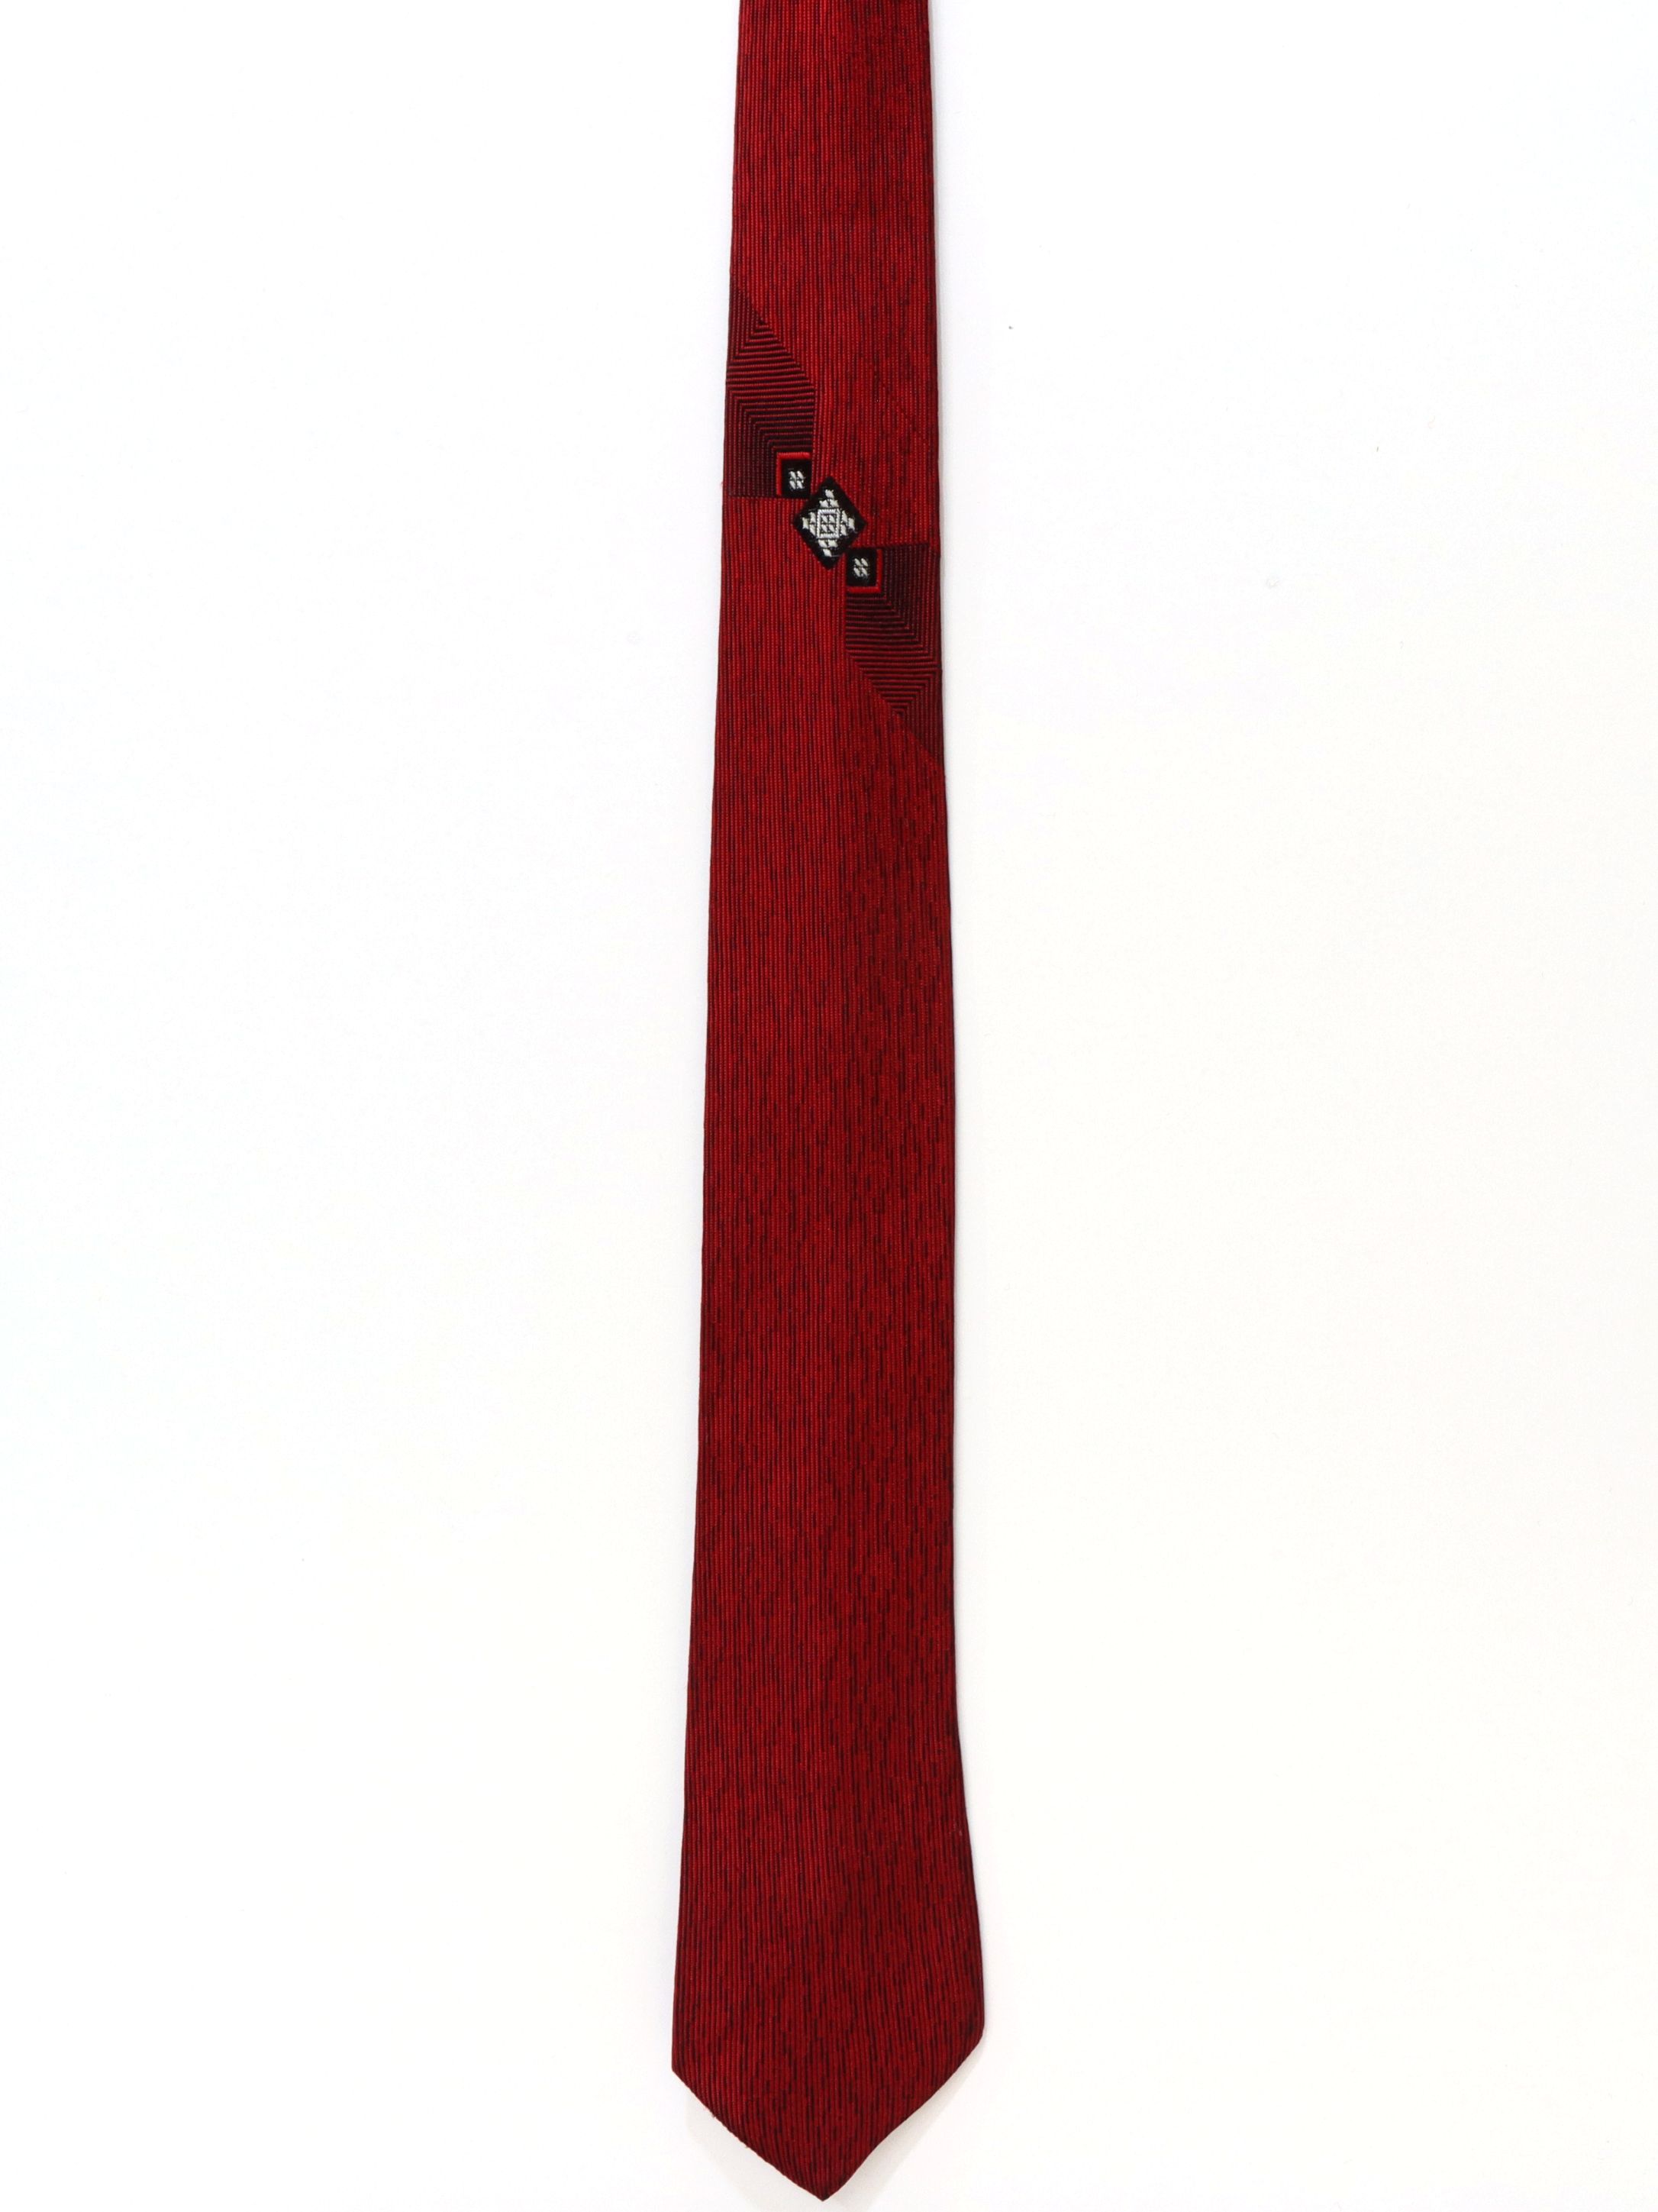 Retro 1950s Neck Tie: Late 50s -No Label- Mens heather dark red ...